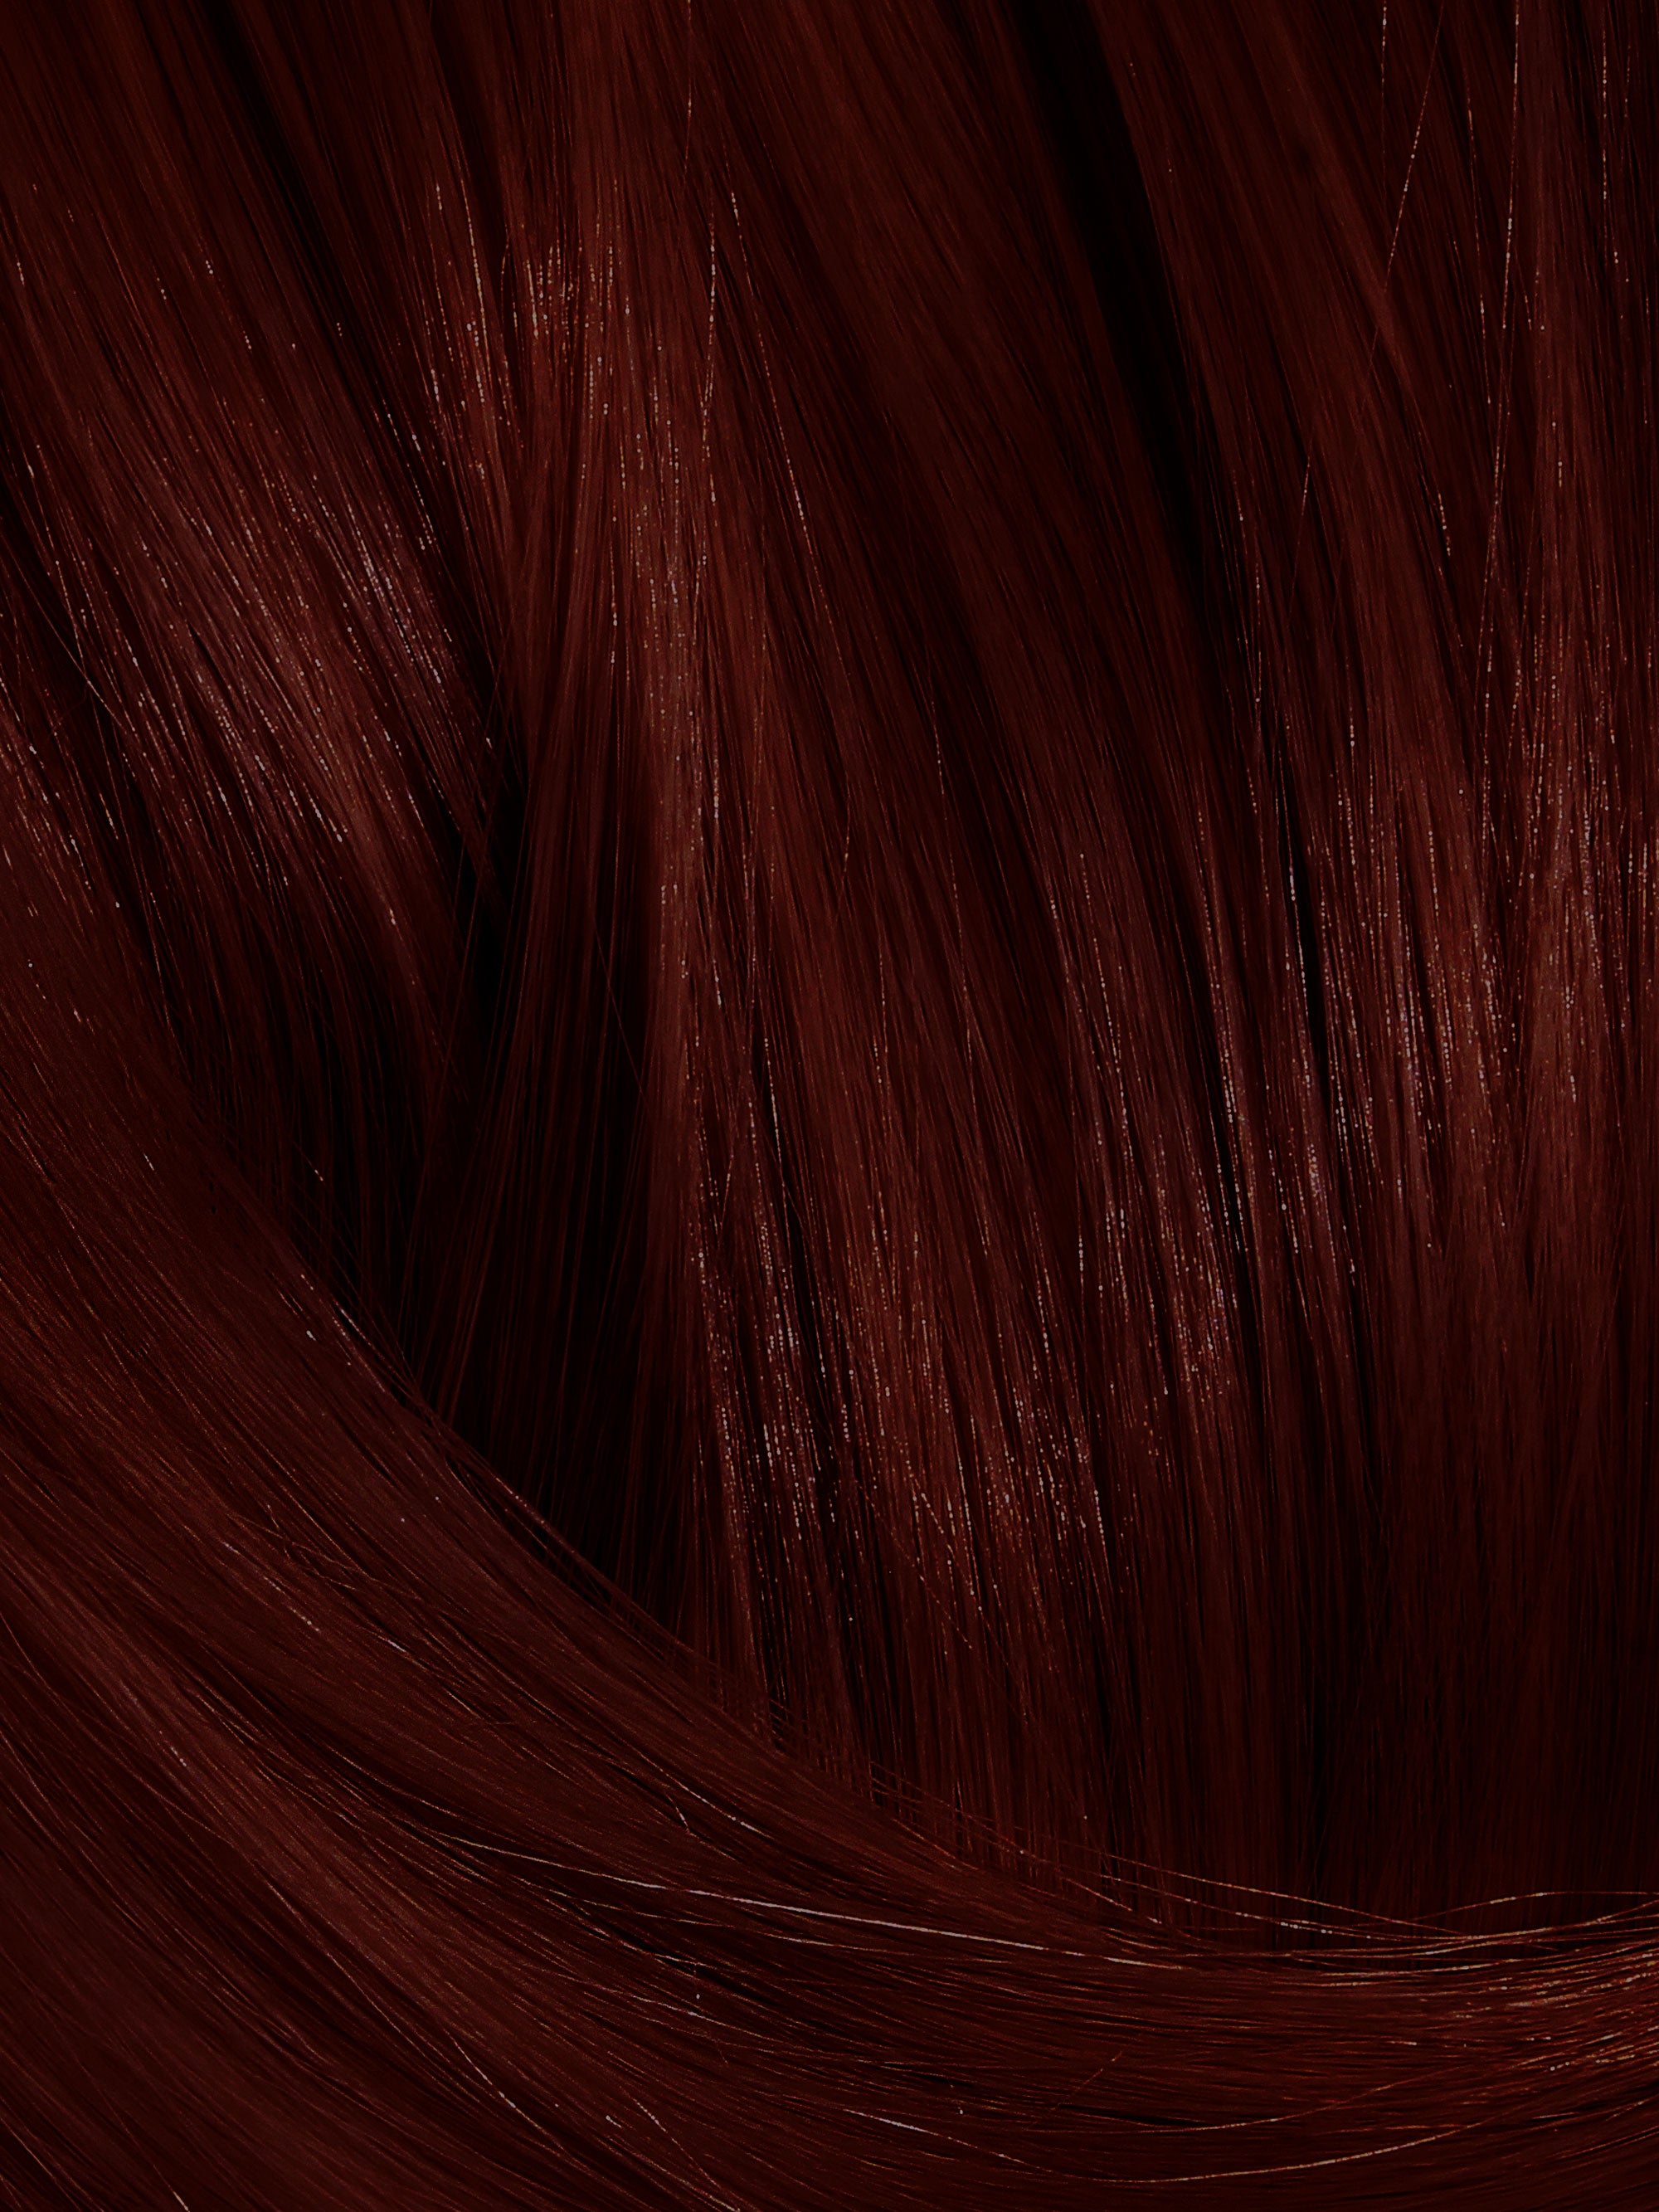 dark reddish brown hair dye